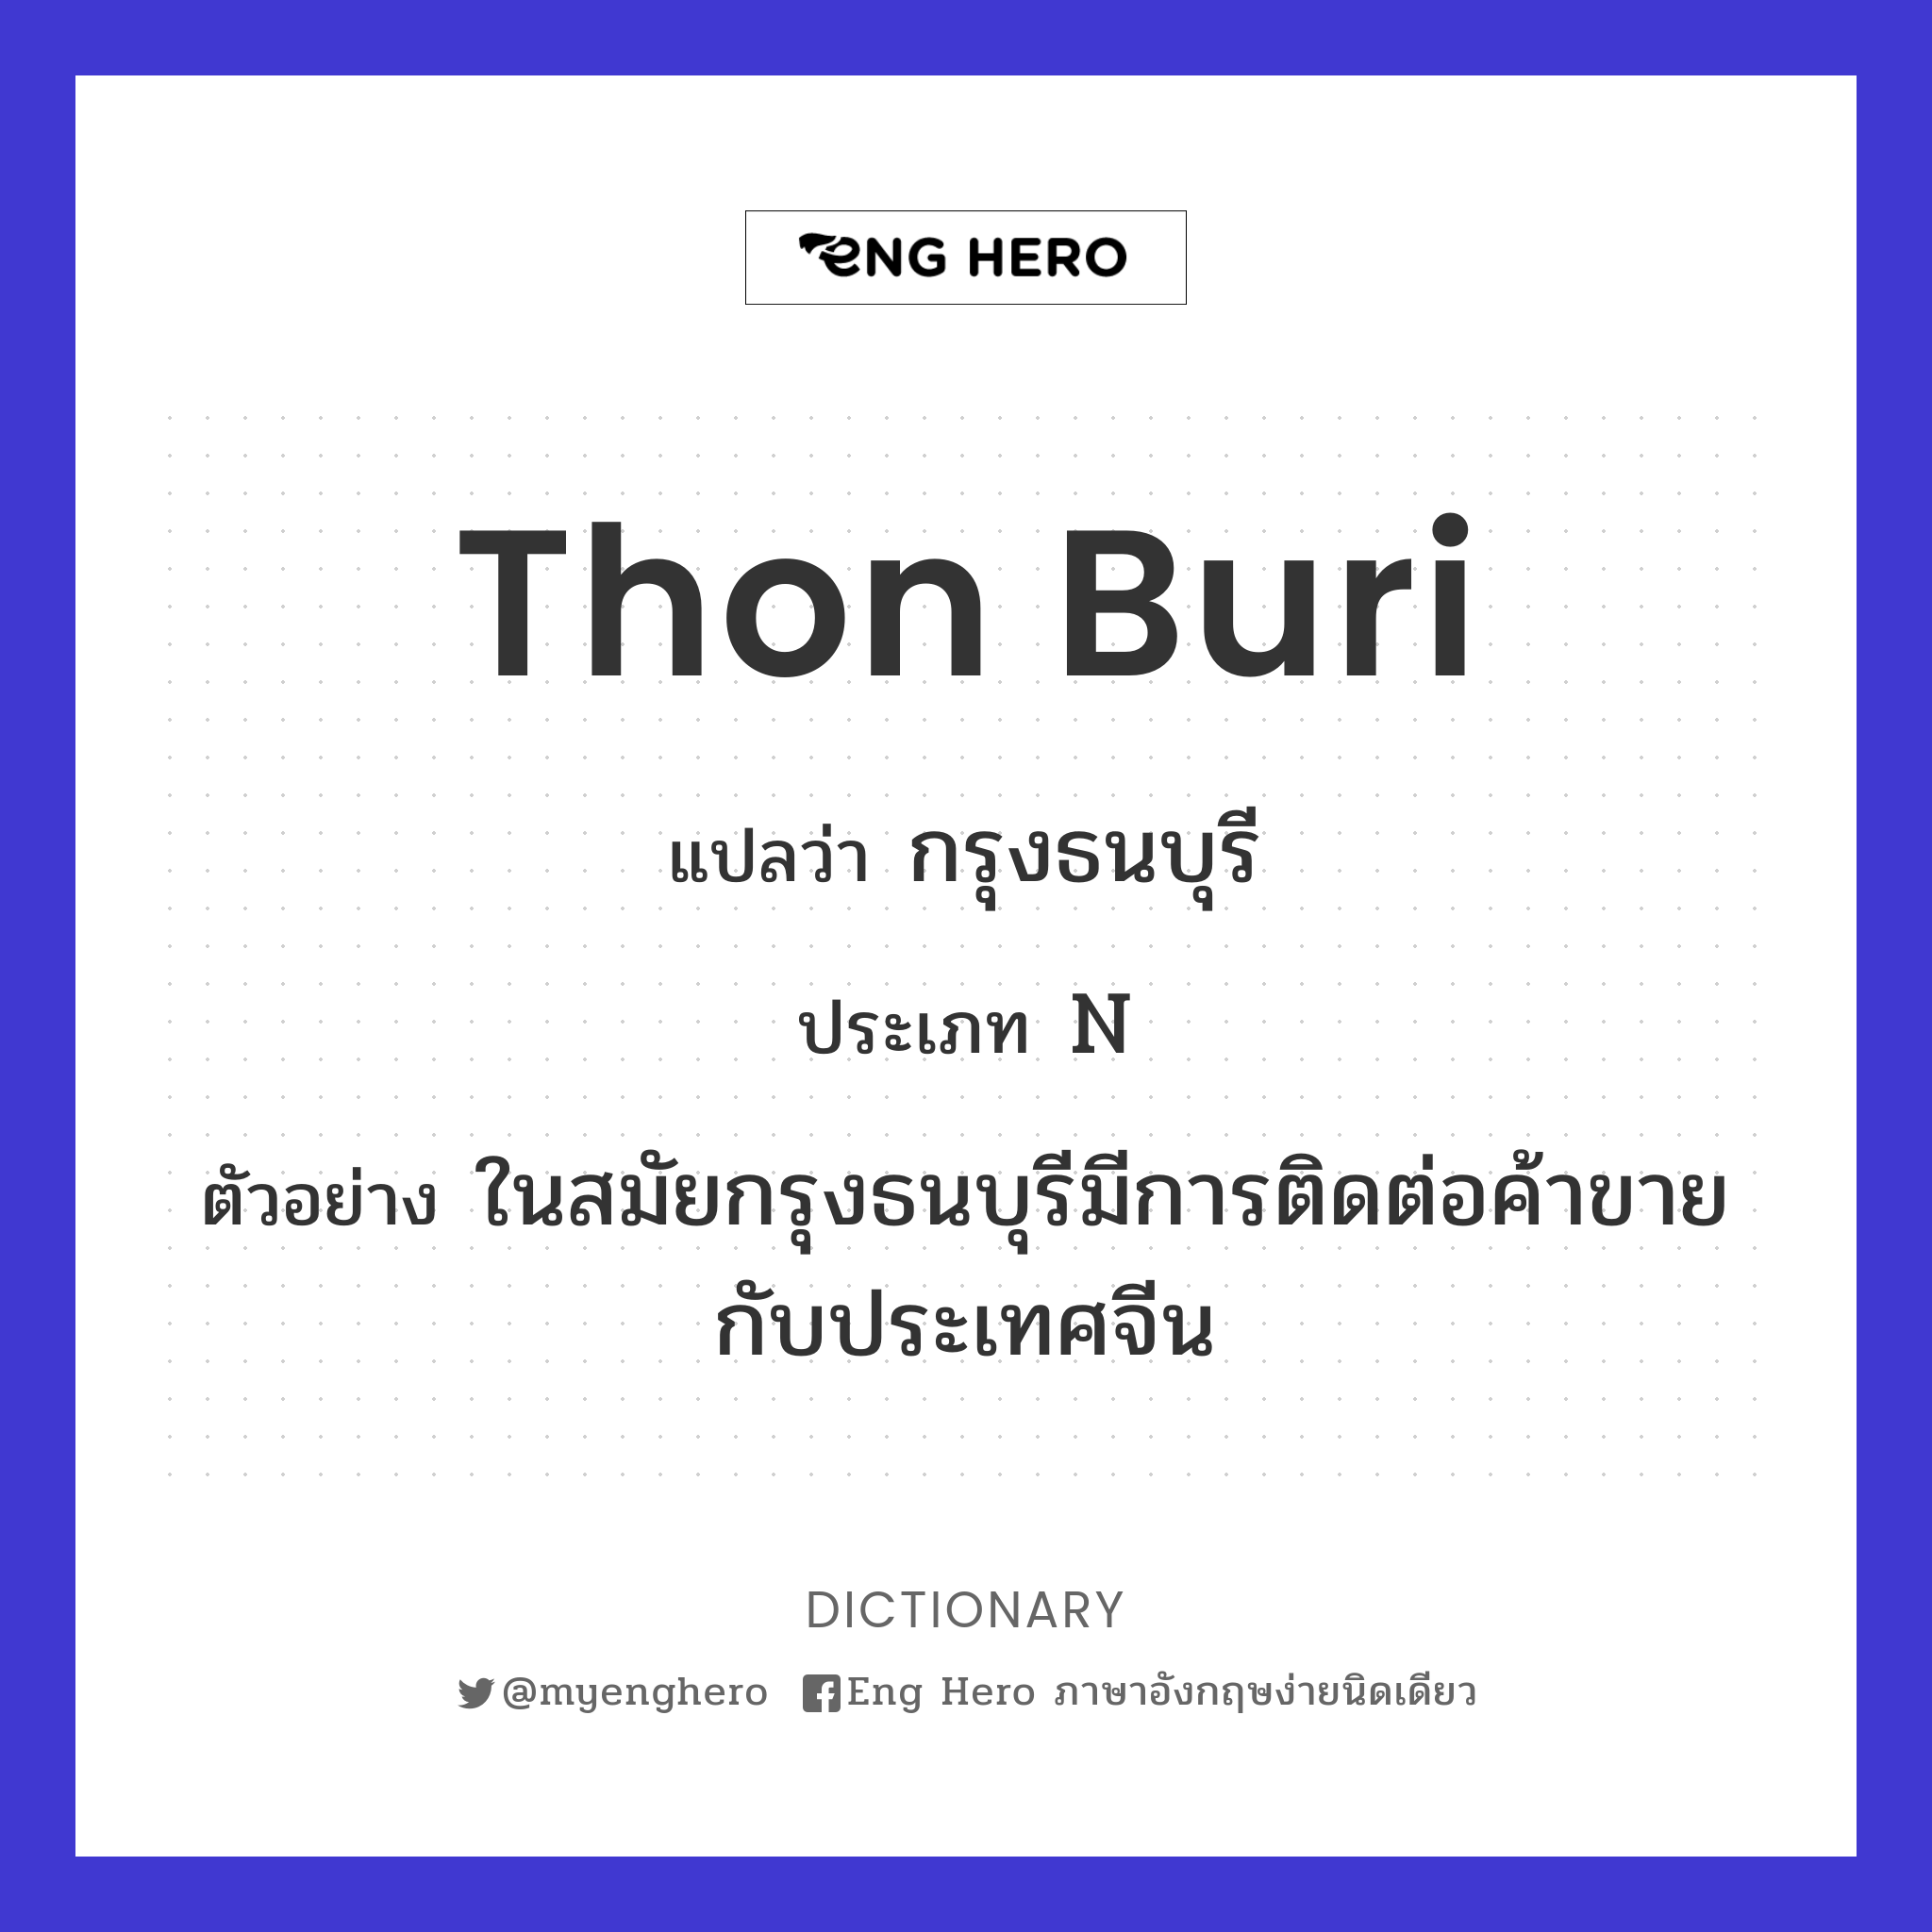 Thon Buri